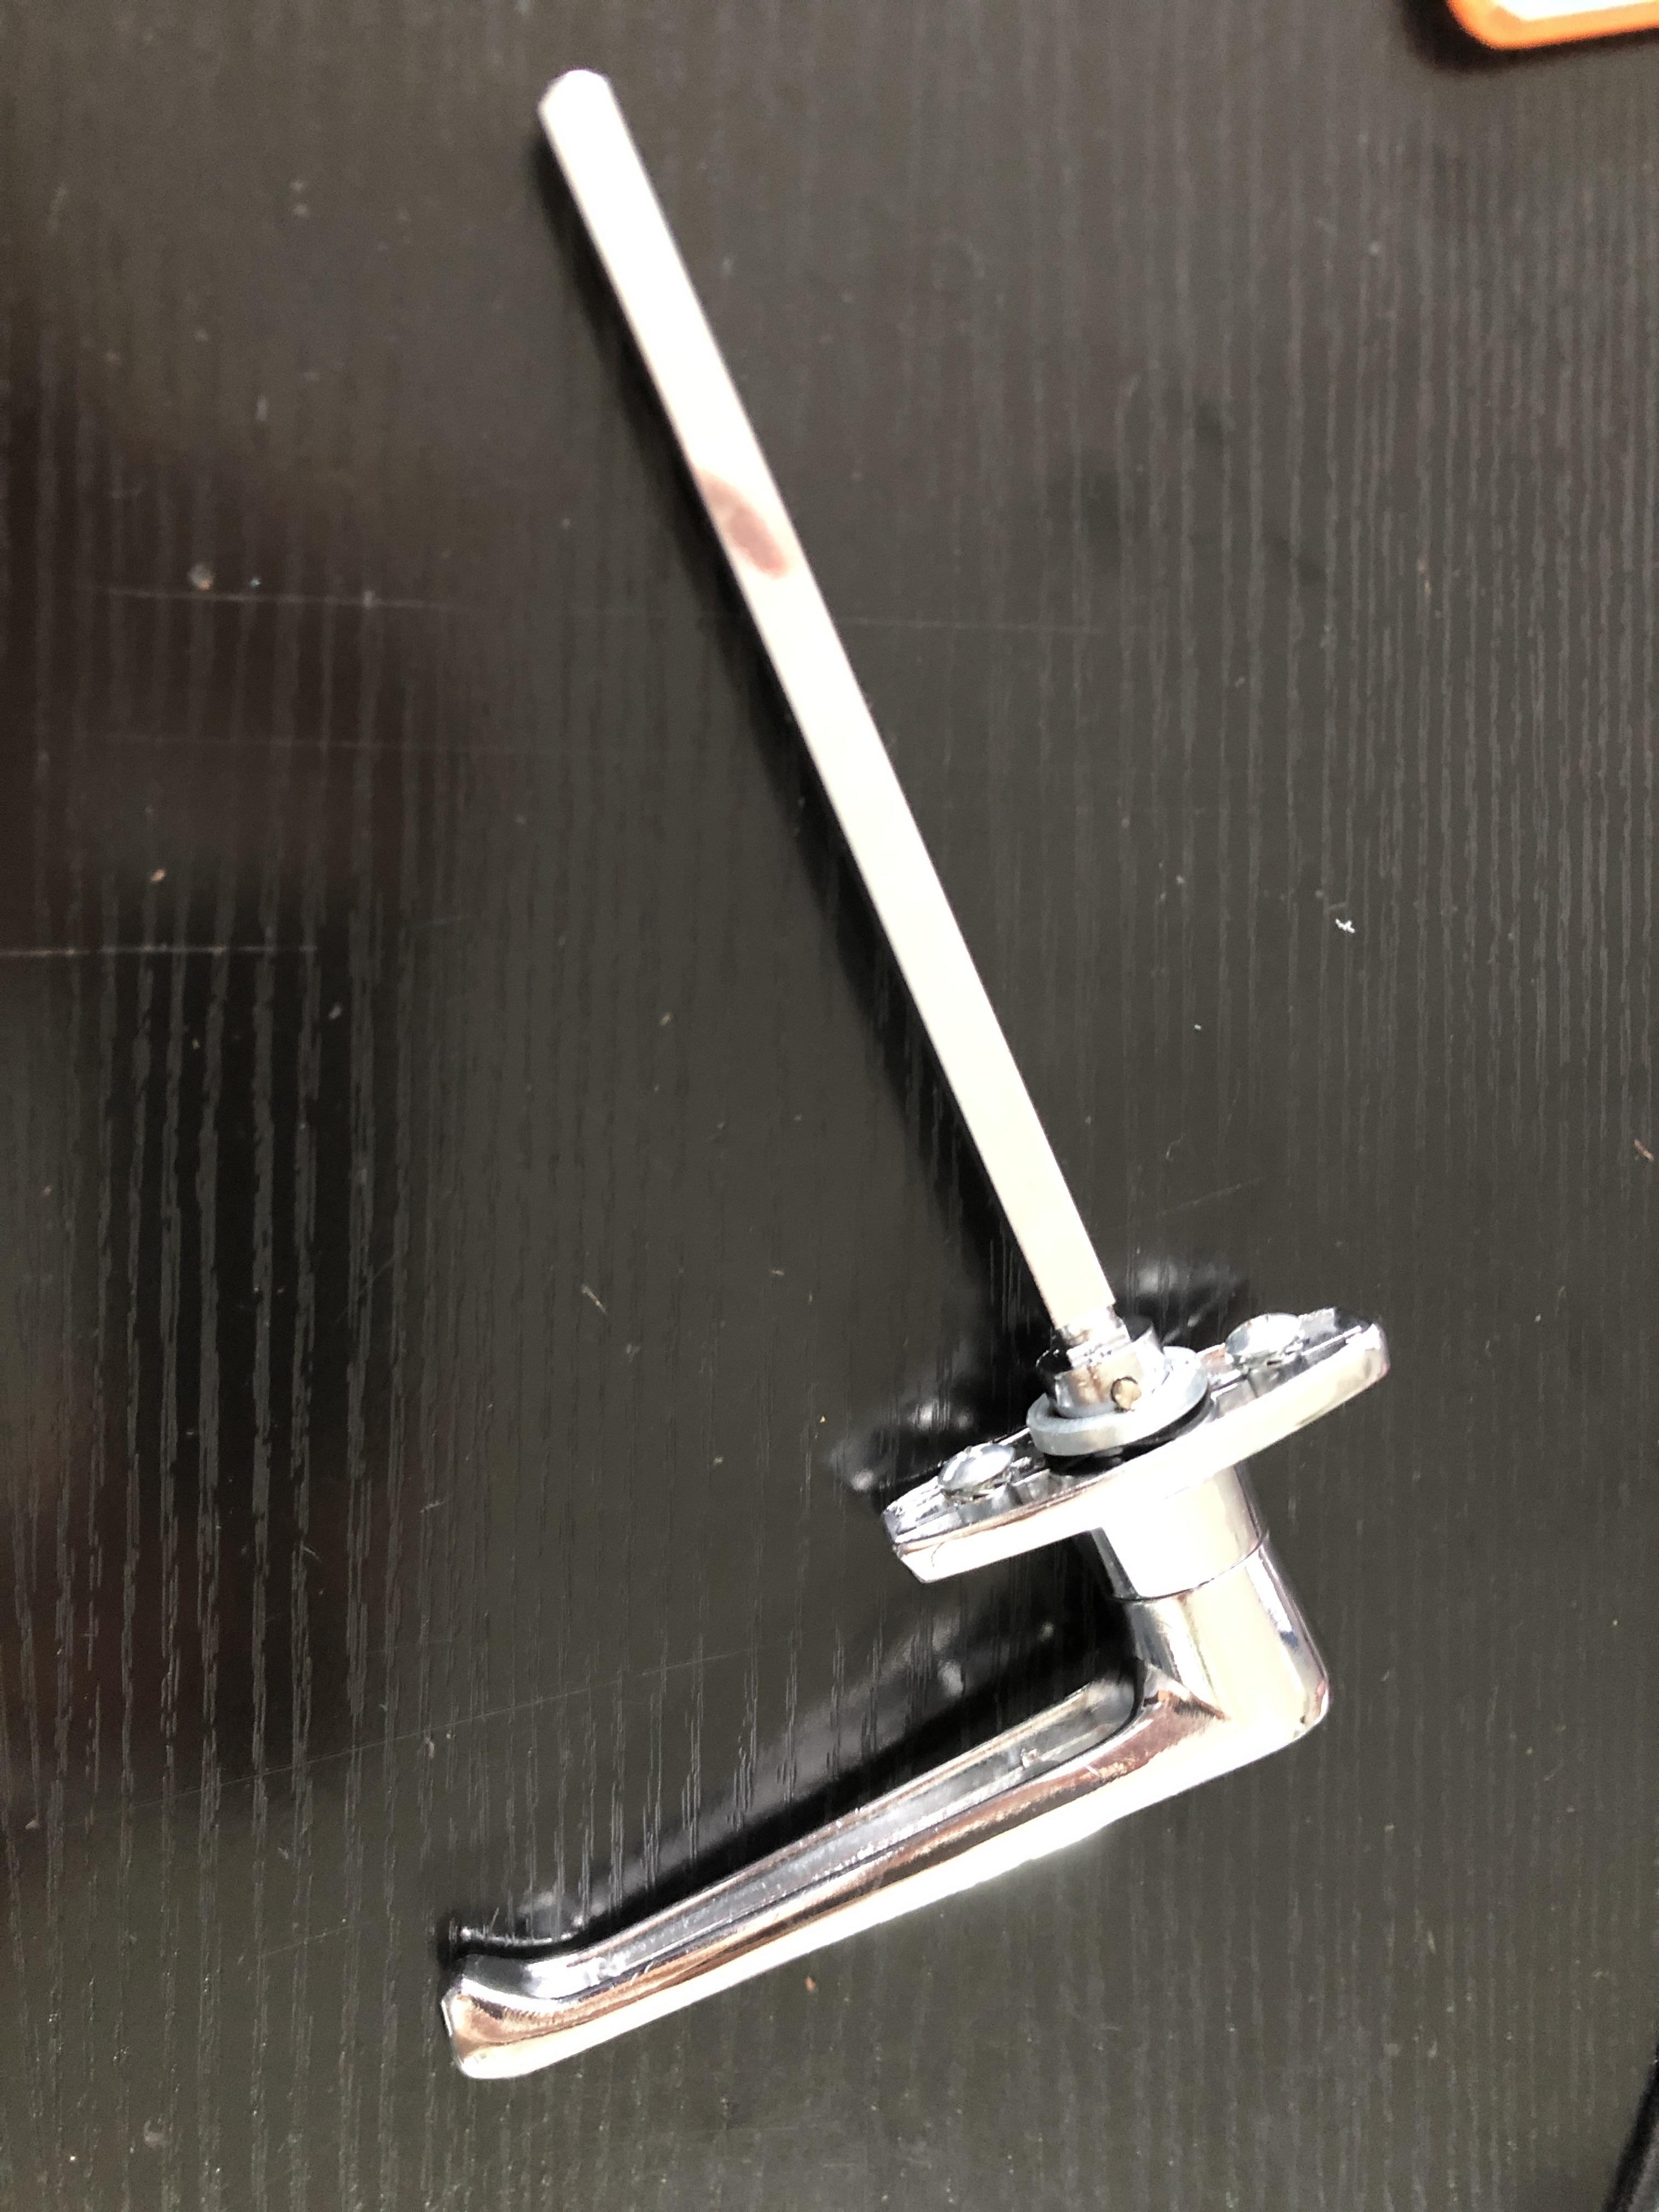 new product Long handlebone key chrome plating